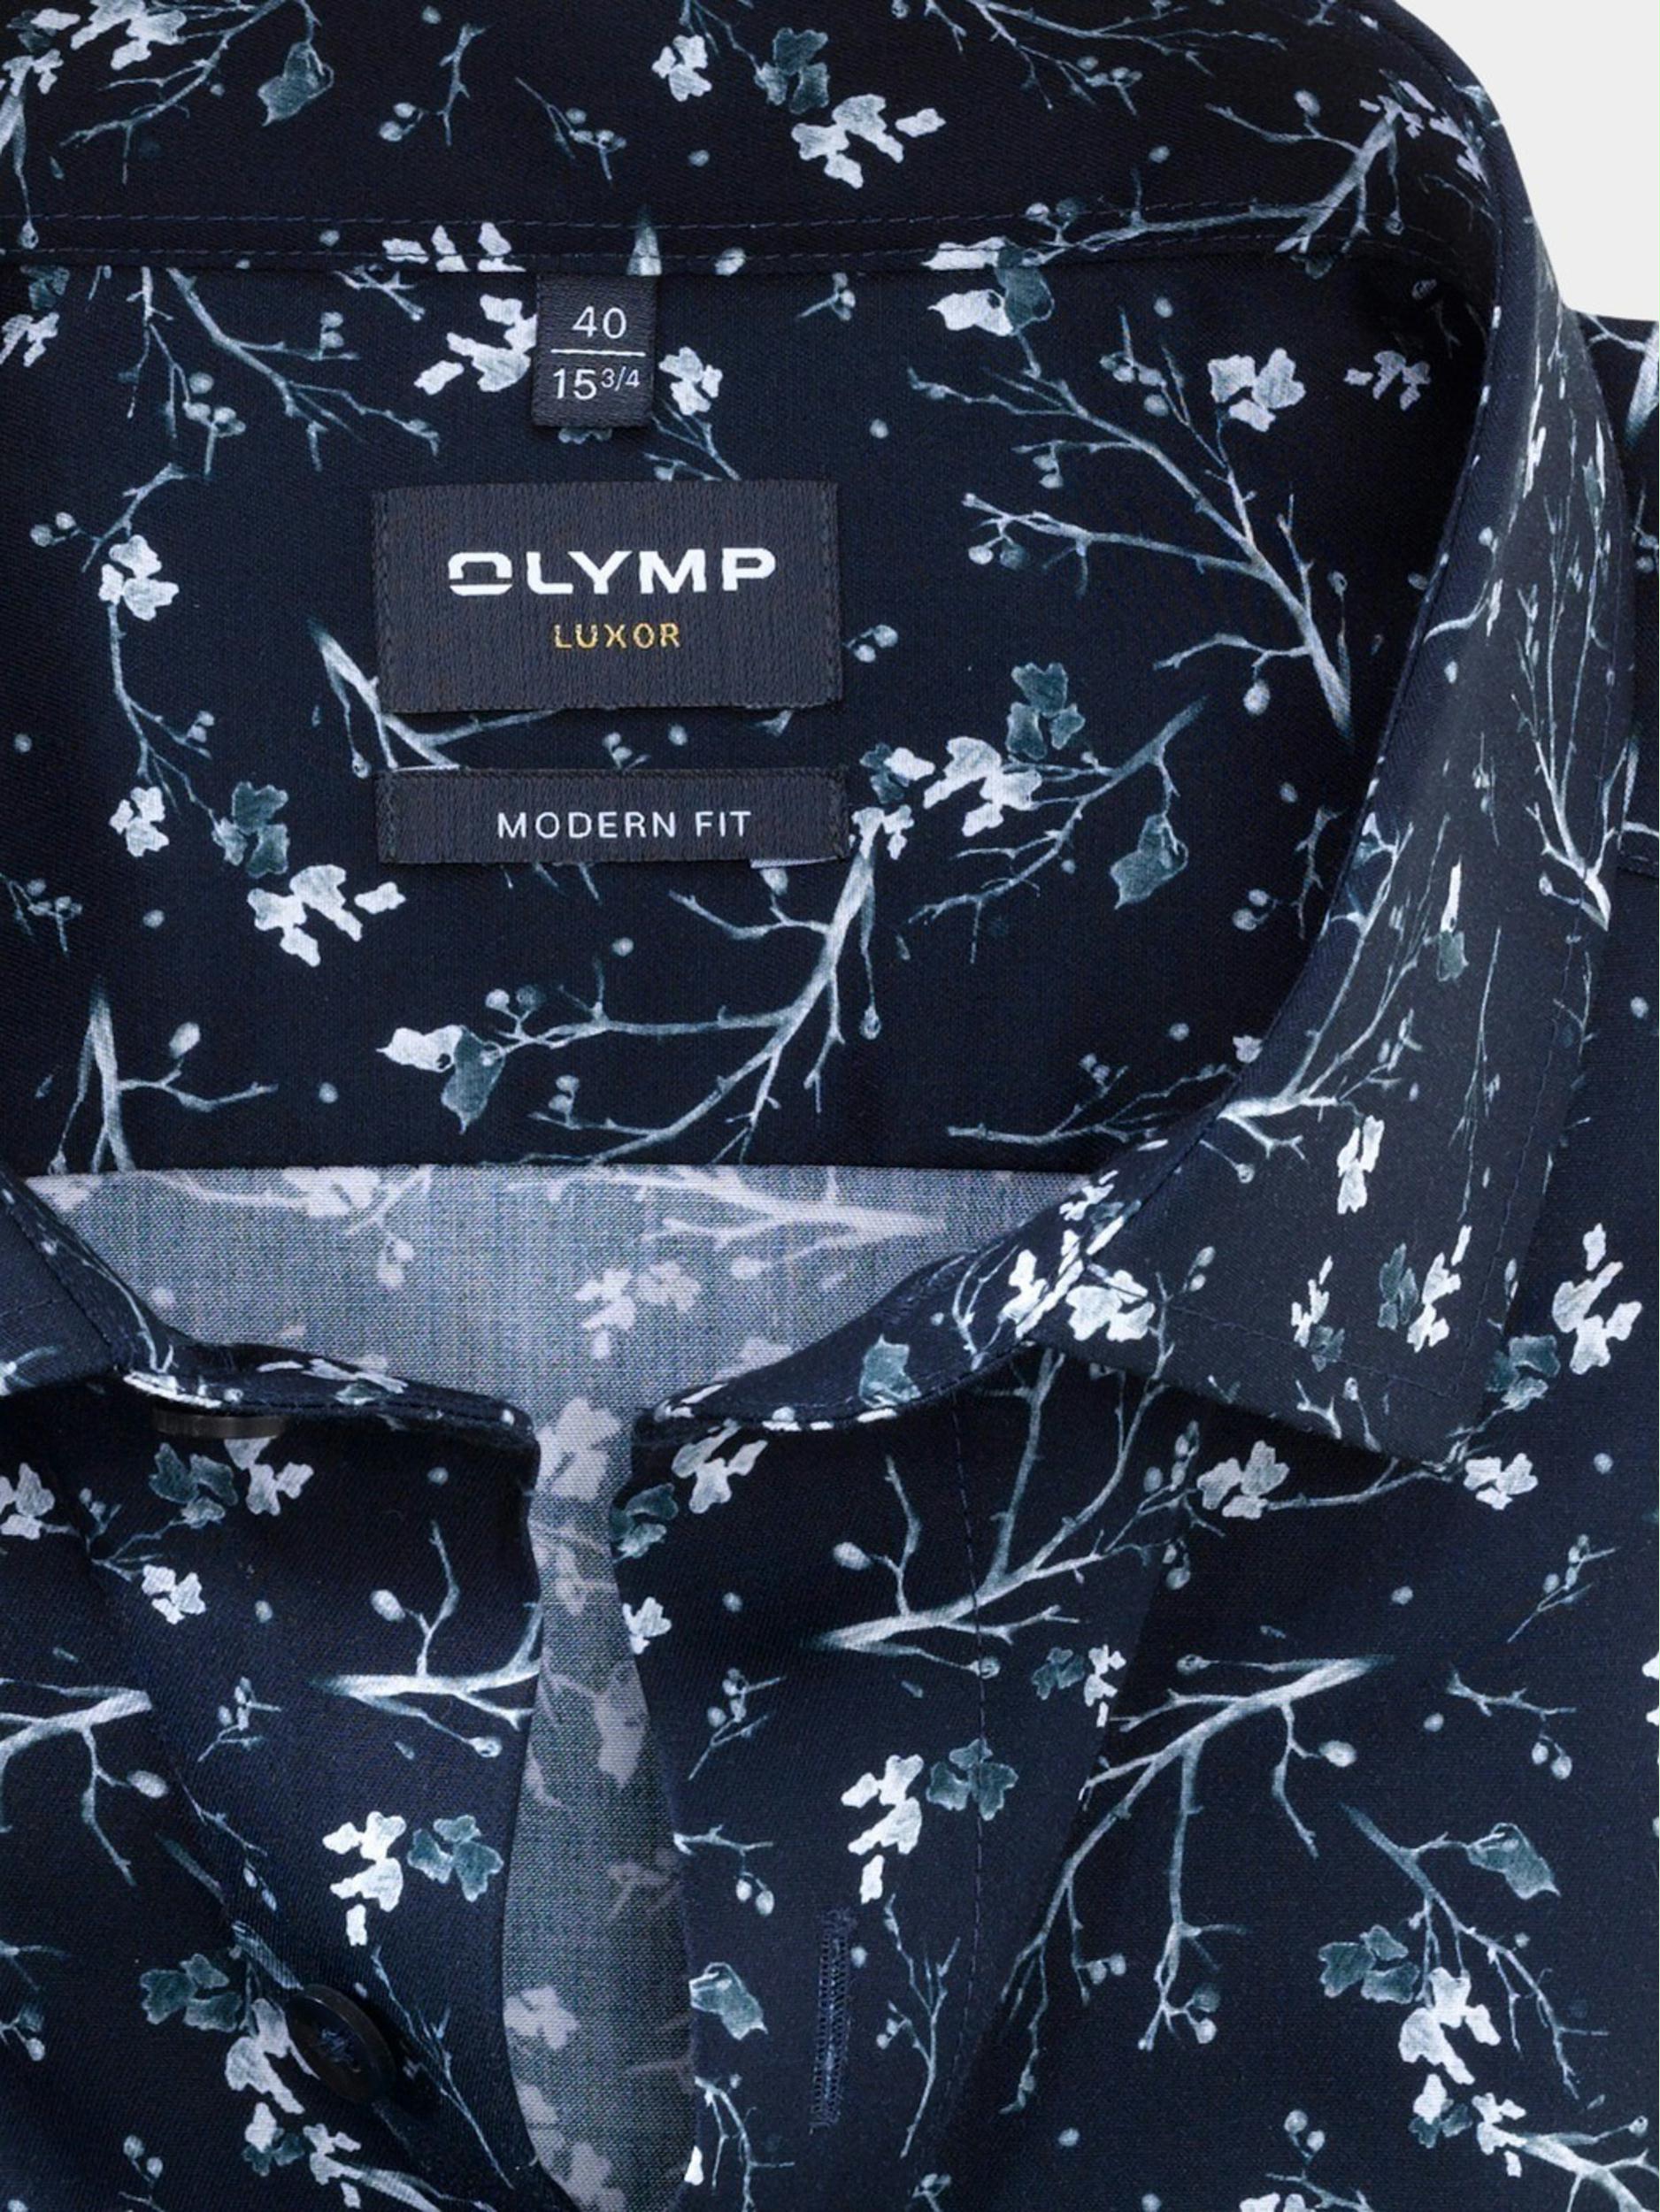 Olymp Business hemd lange mouw Blauw 1314/24 Hemden 131424/18